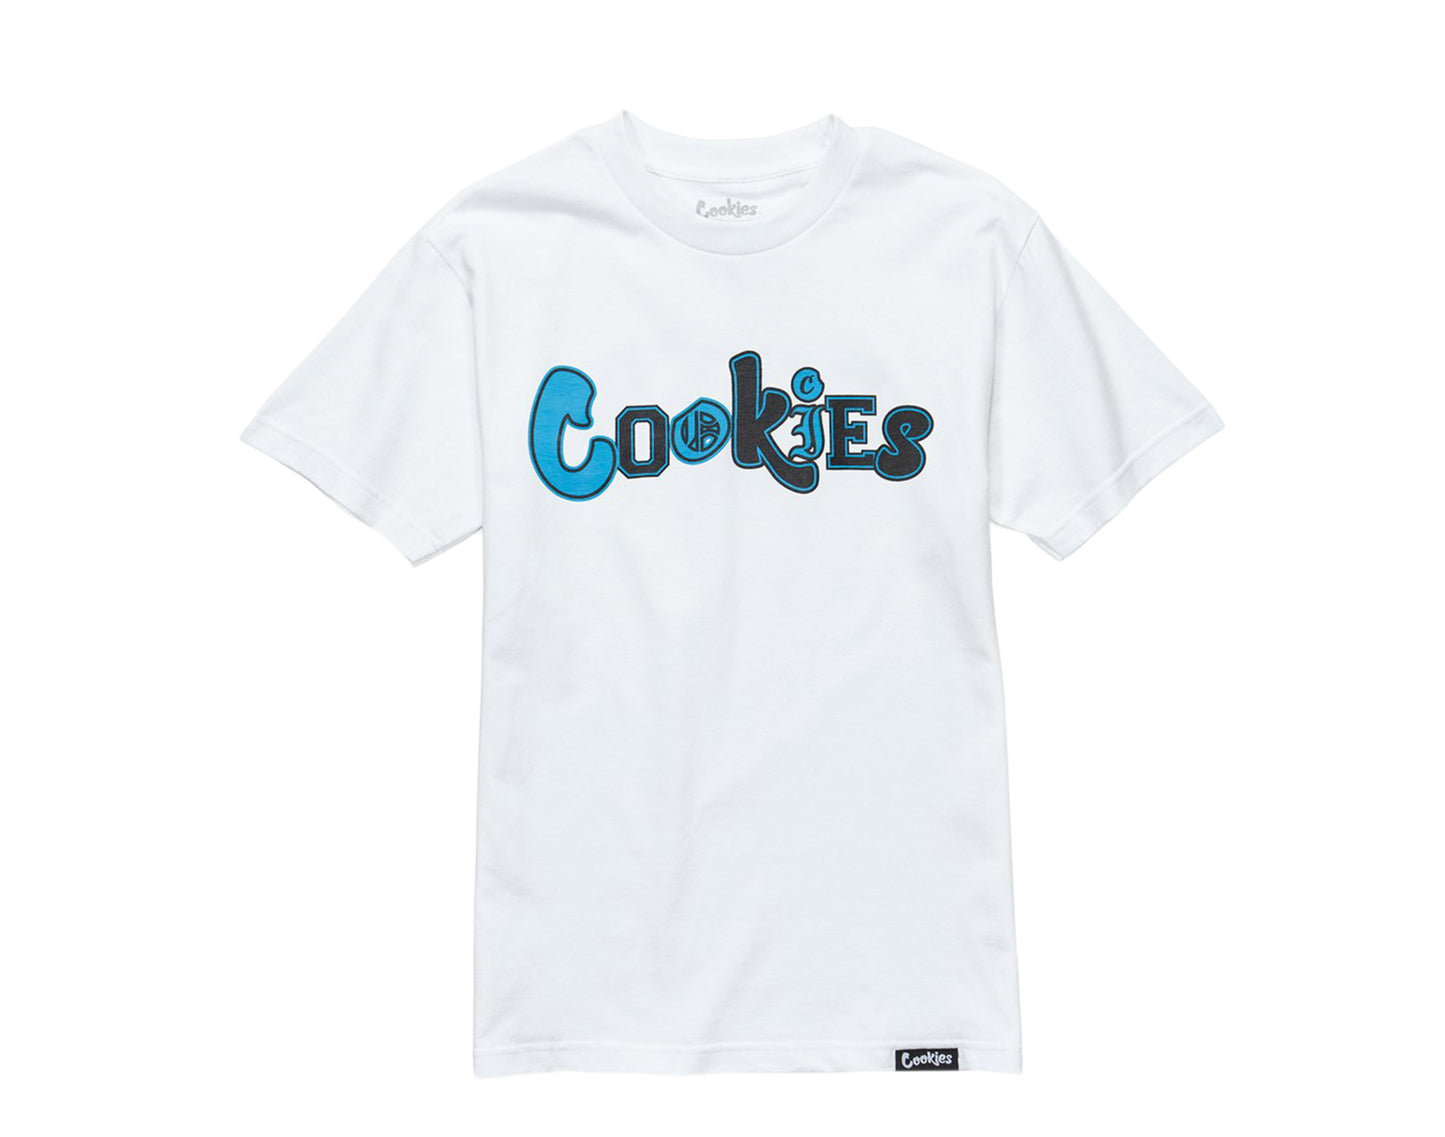 Cookies City Limits 2-Tone Printed White/Blue Tee Shirt 1545T4115-WHT